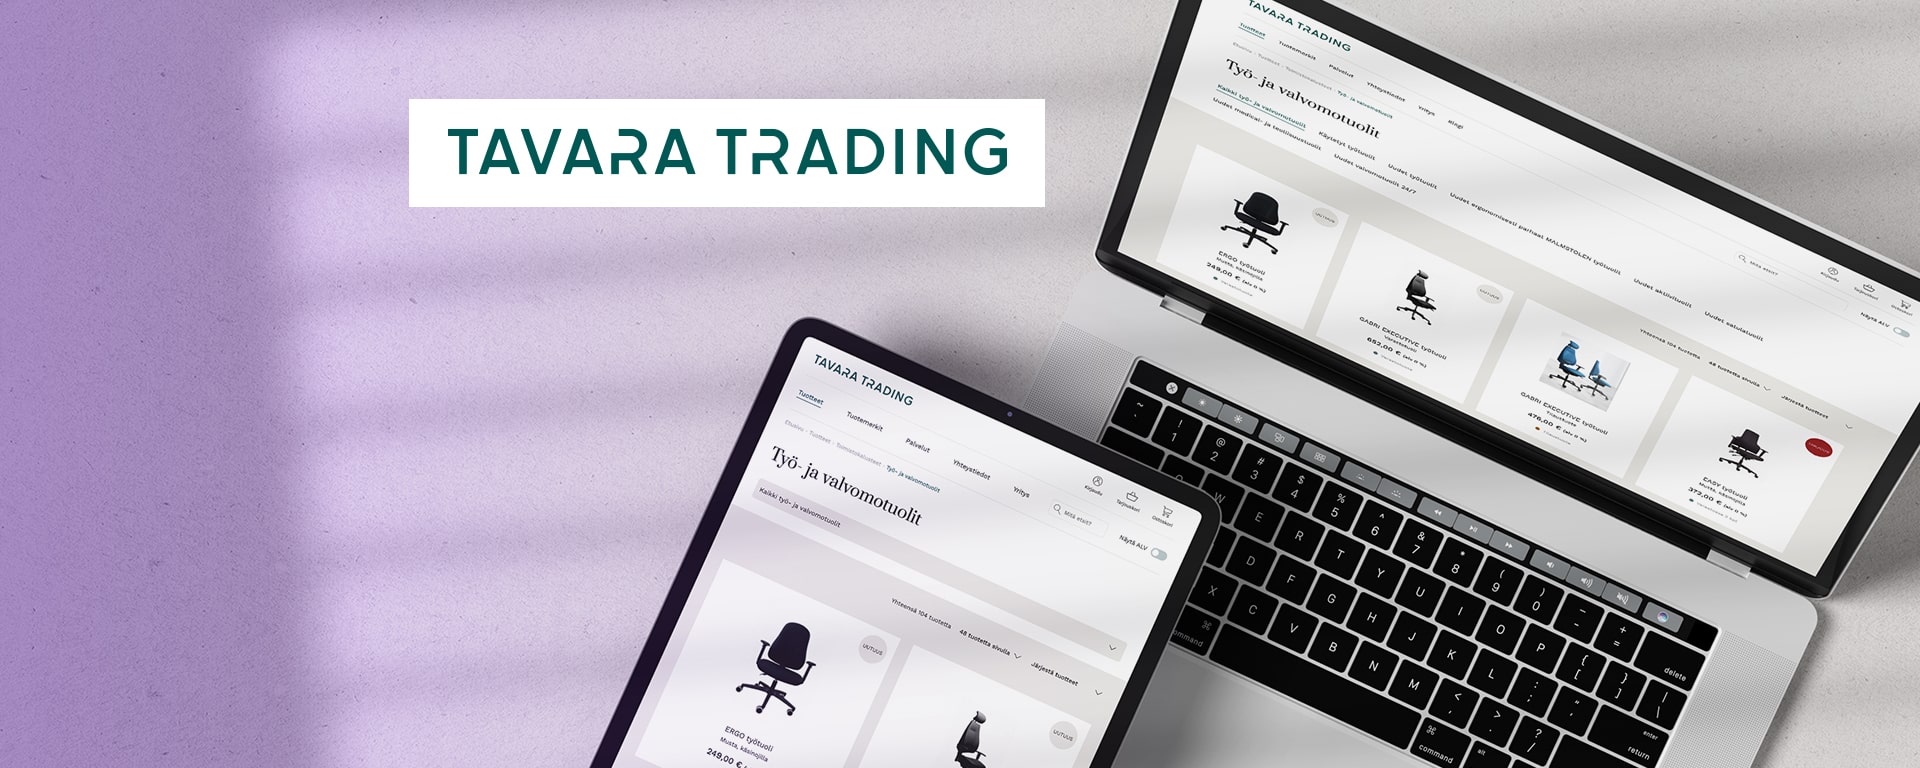 Tavara Trading